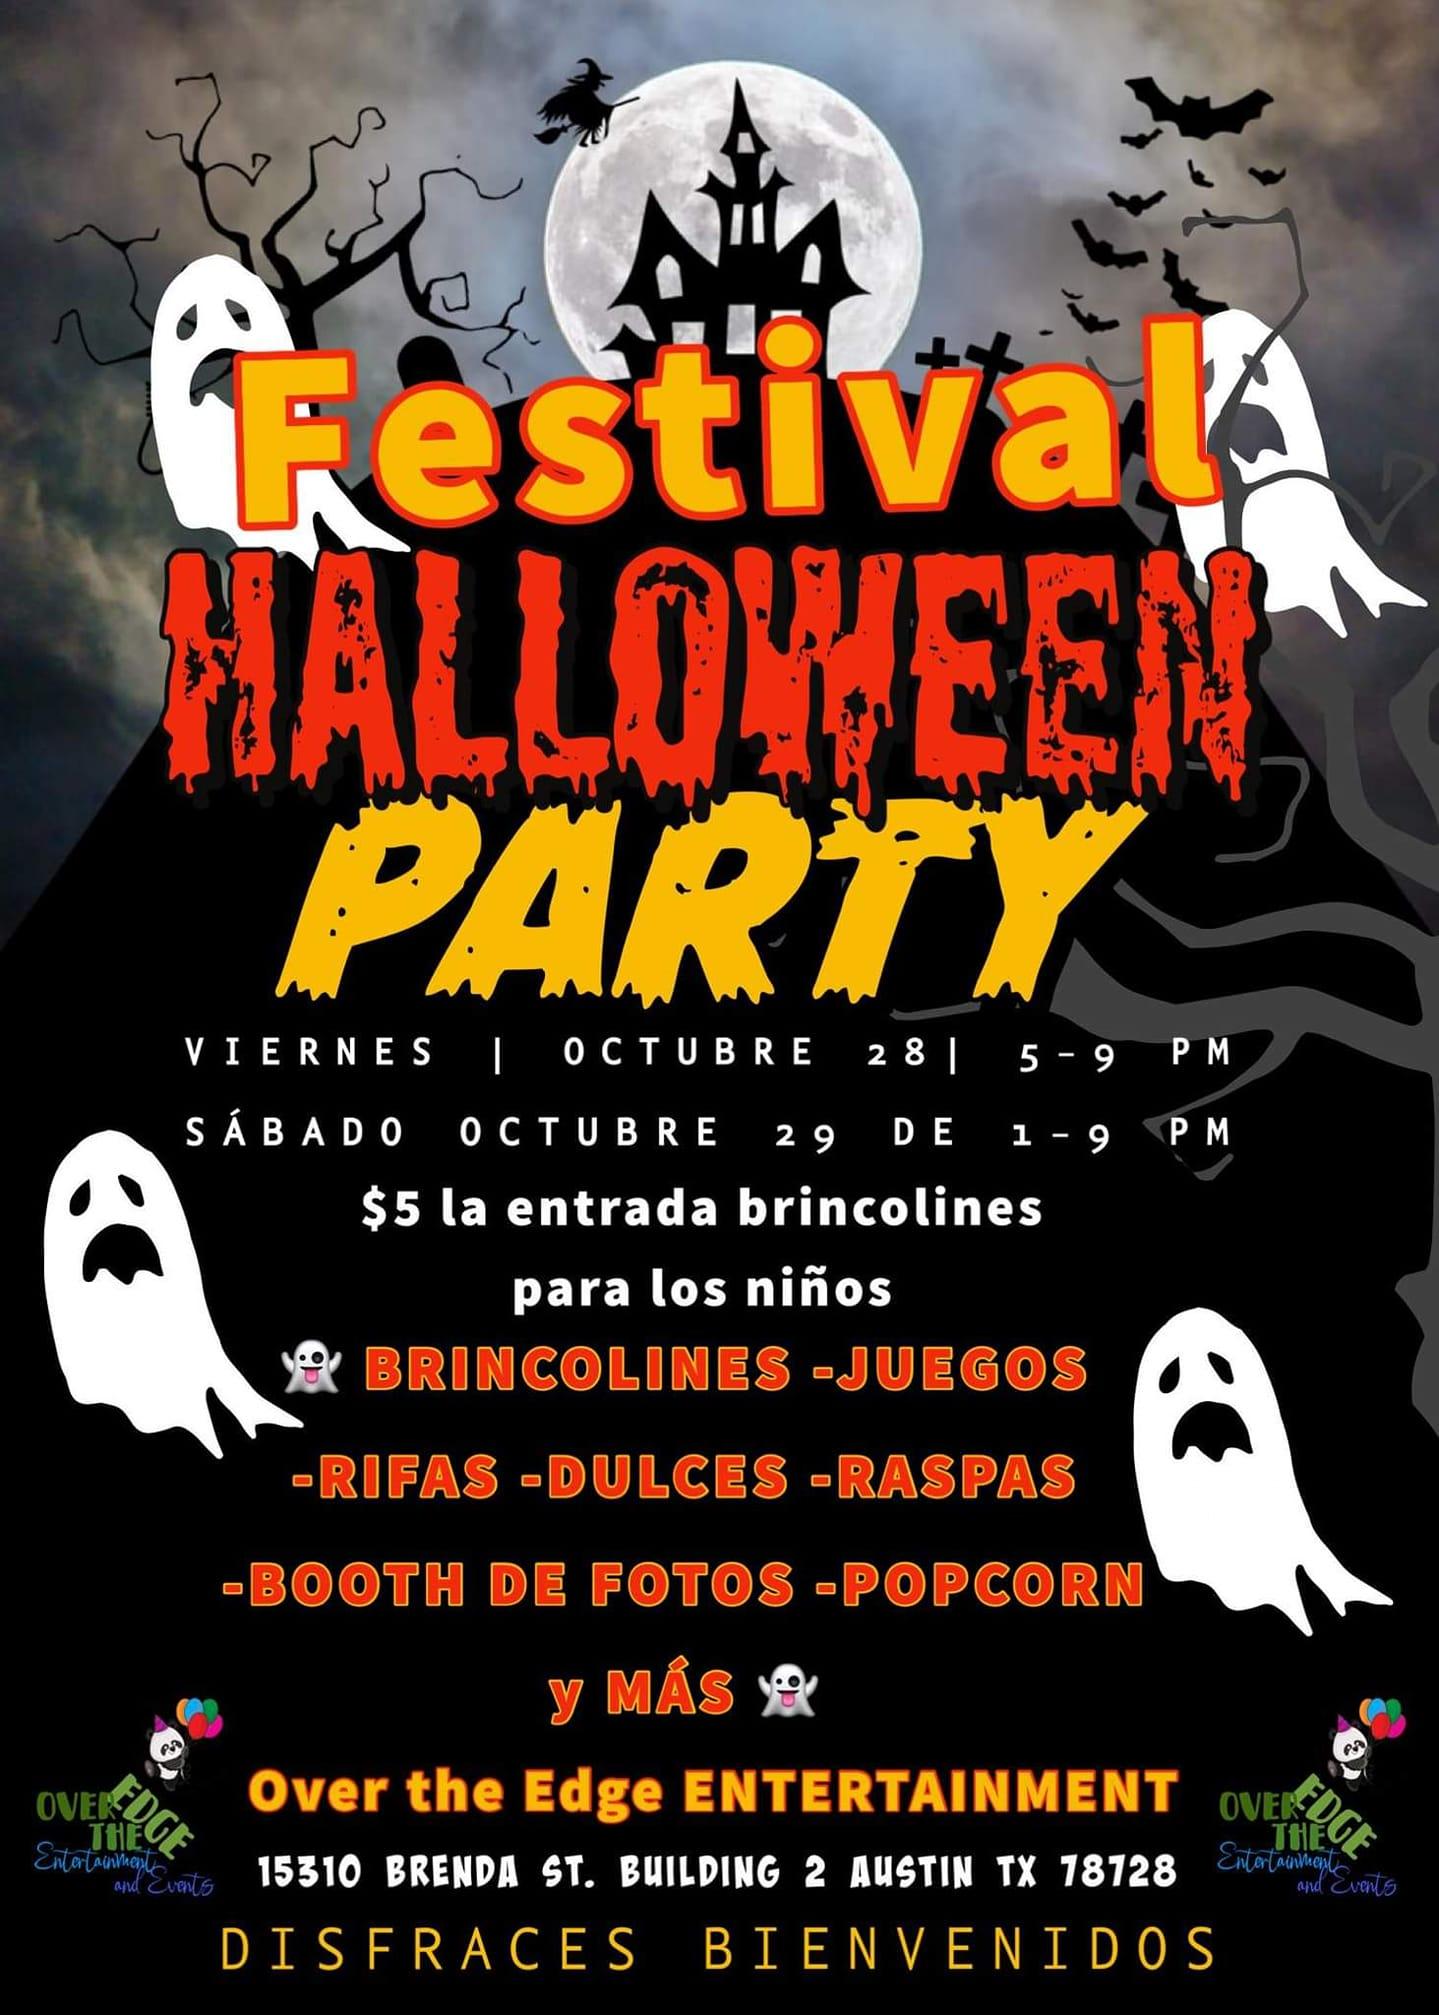 Halloween Festival at Austin, TX
Fri Oct 28, 1:00 PM - Sat Oct 29, 9:00 PM
in 10 days